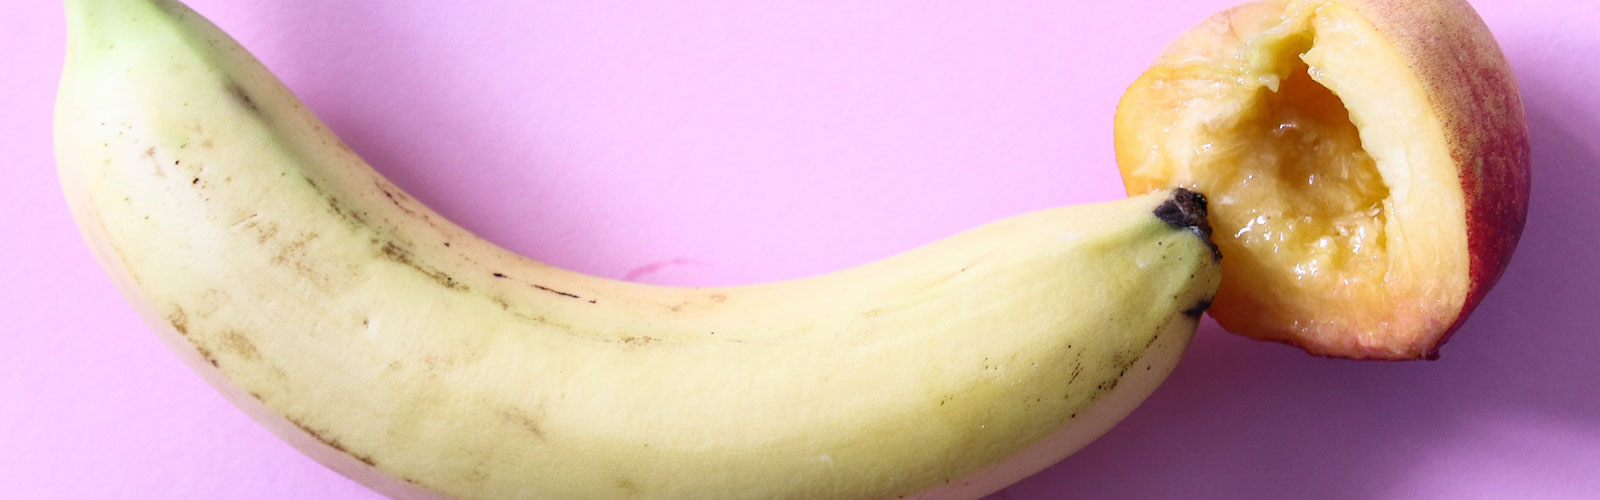 Banana and sliced peach mimicking penetration